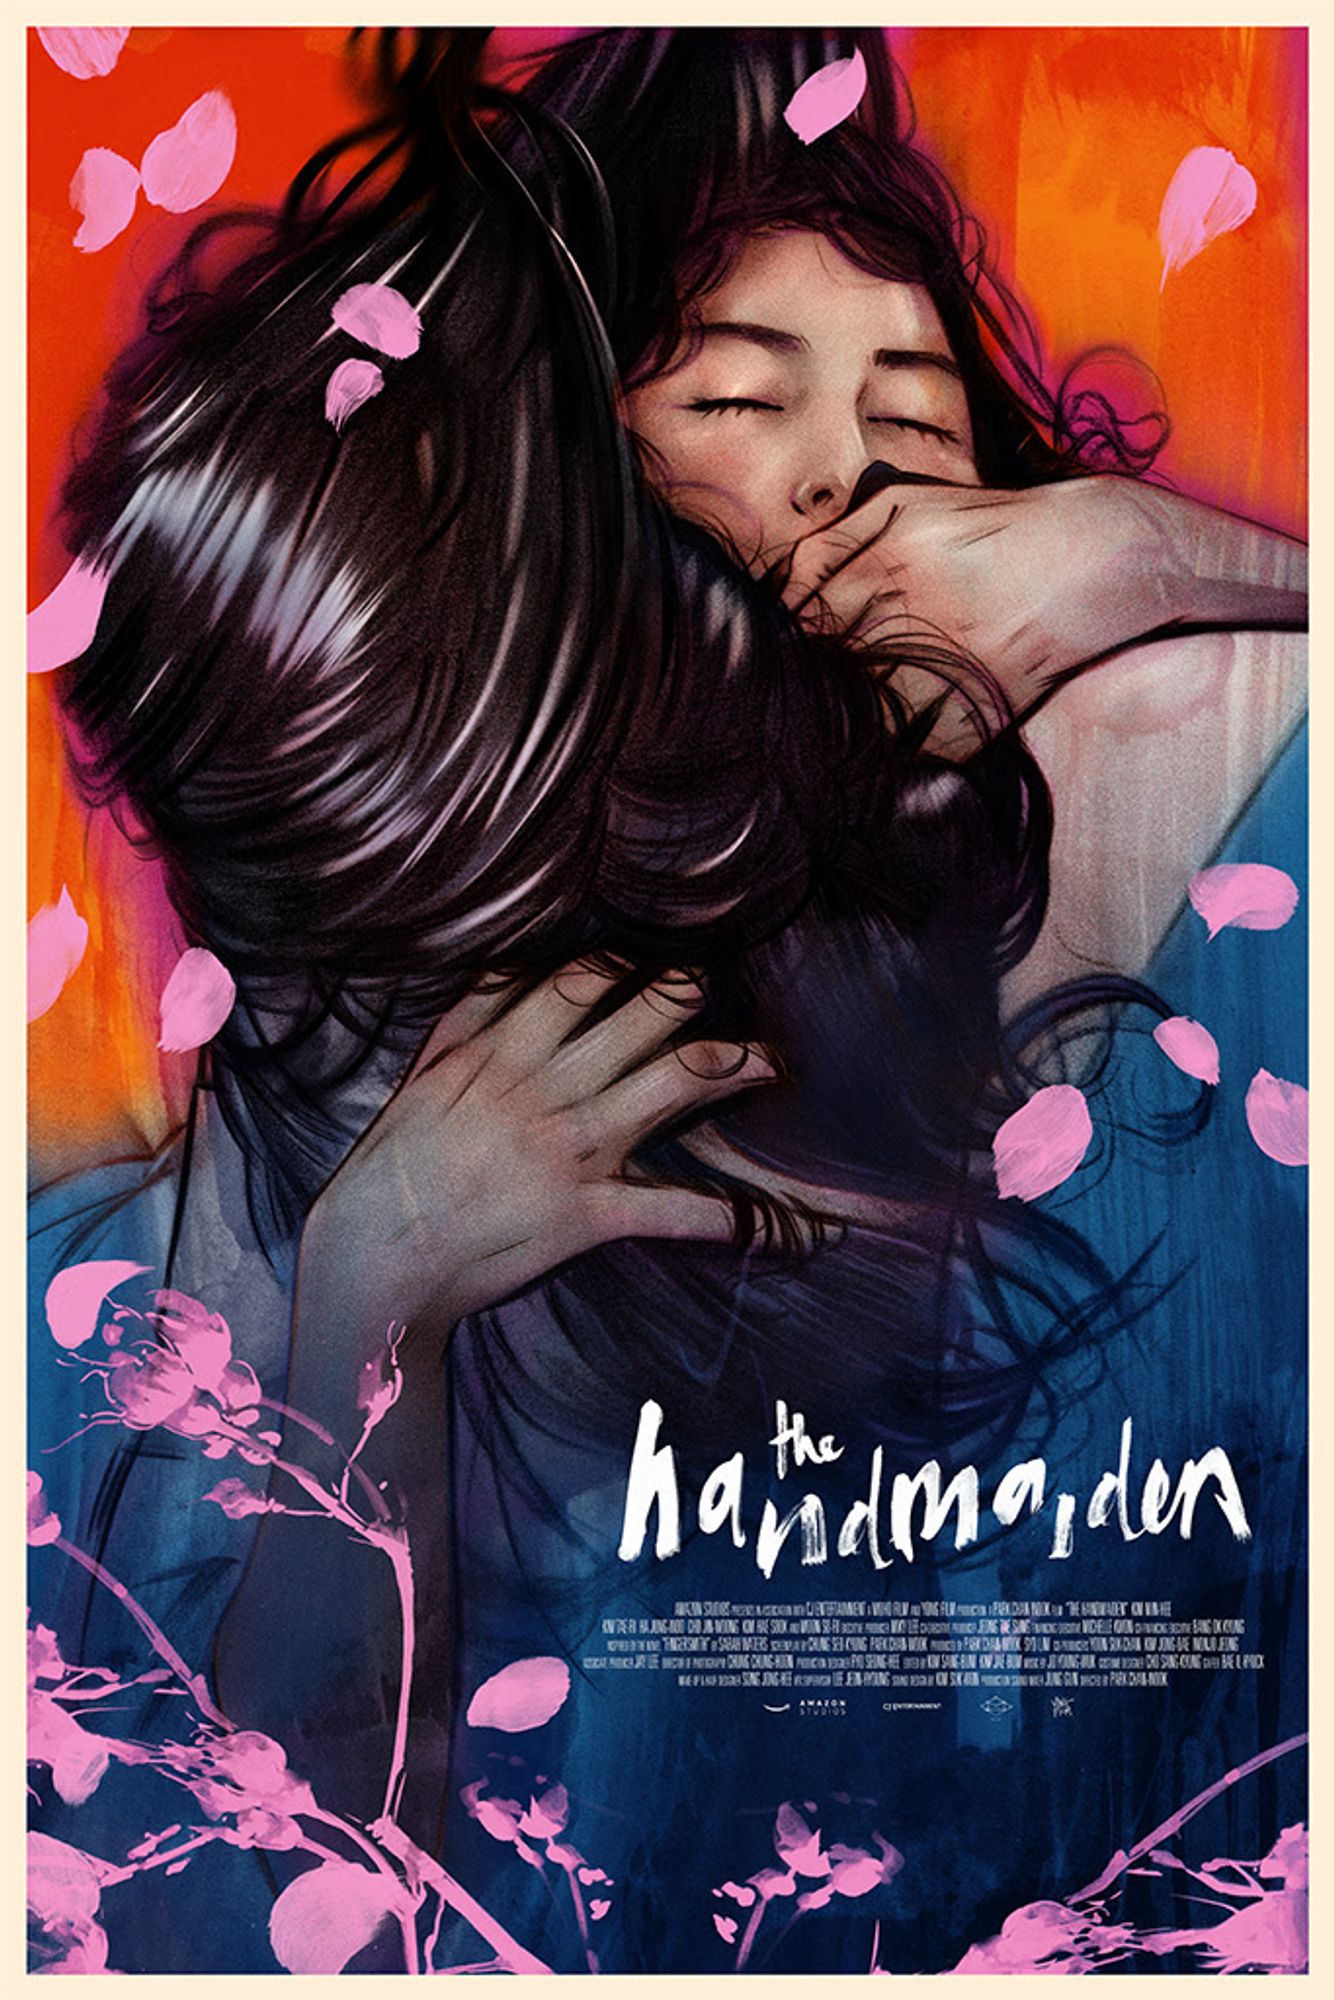 Tula Lotay's "The Handmaiden" Poster for Mondo on Sale Tomorrow - Bleeding Cool News